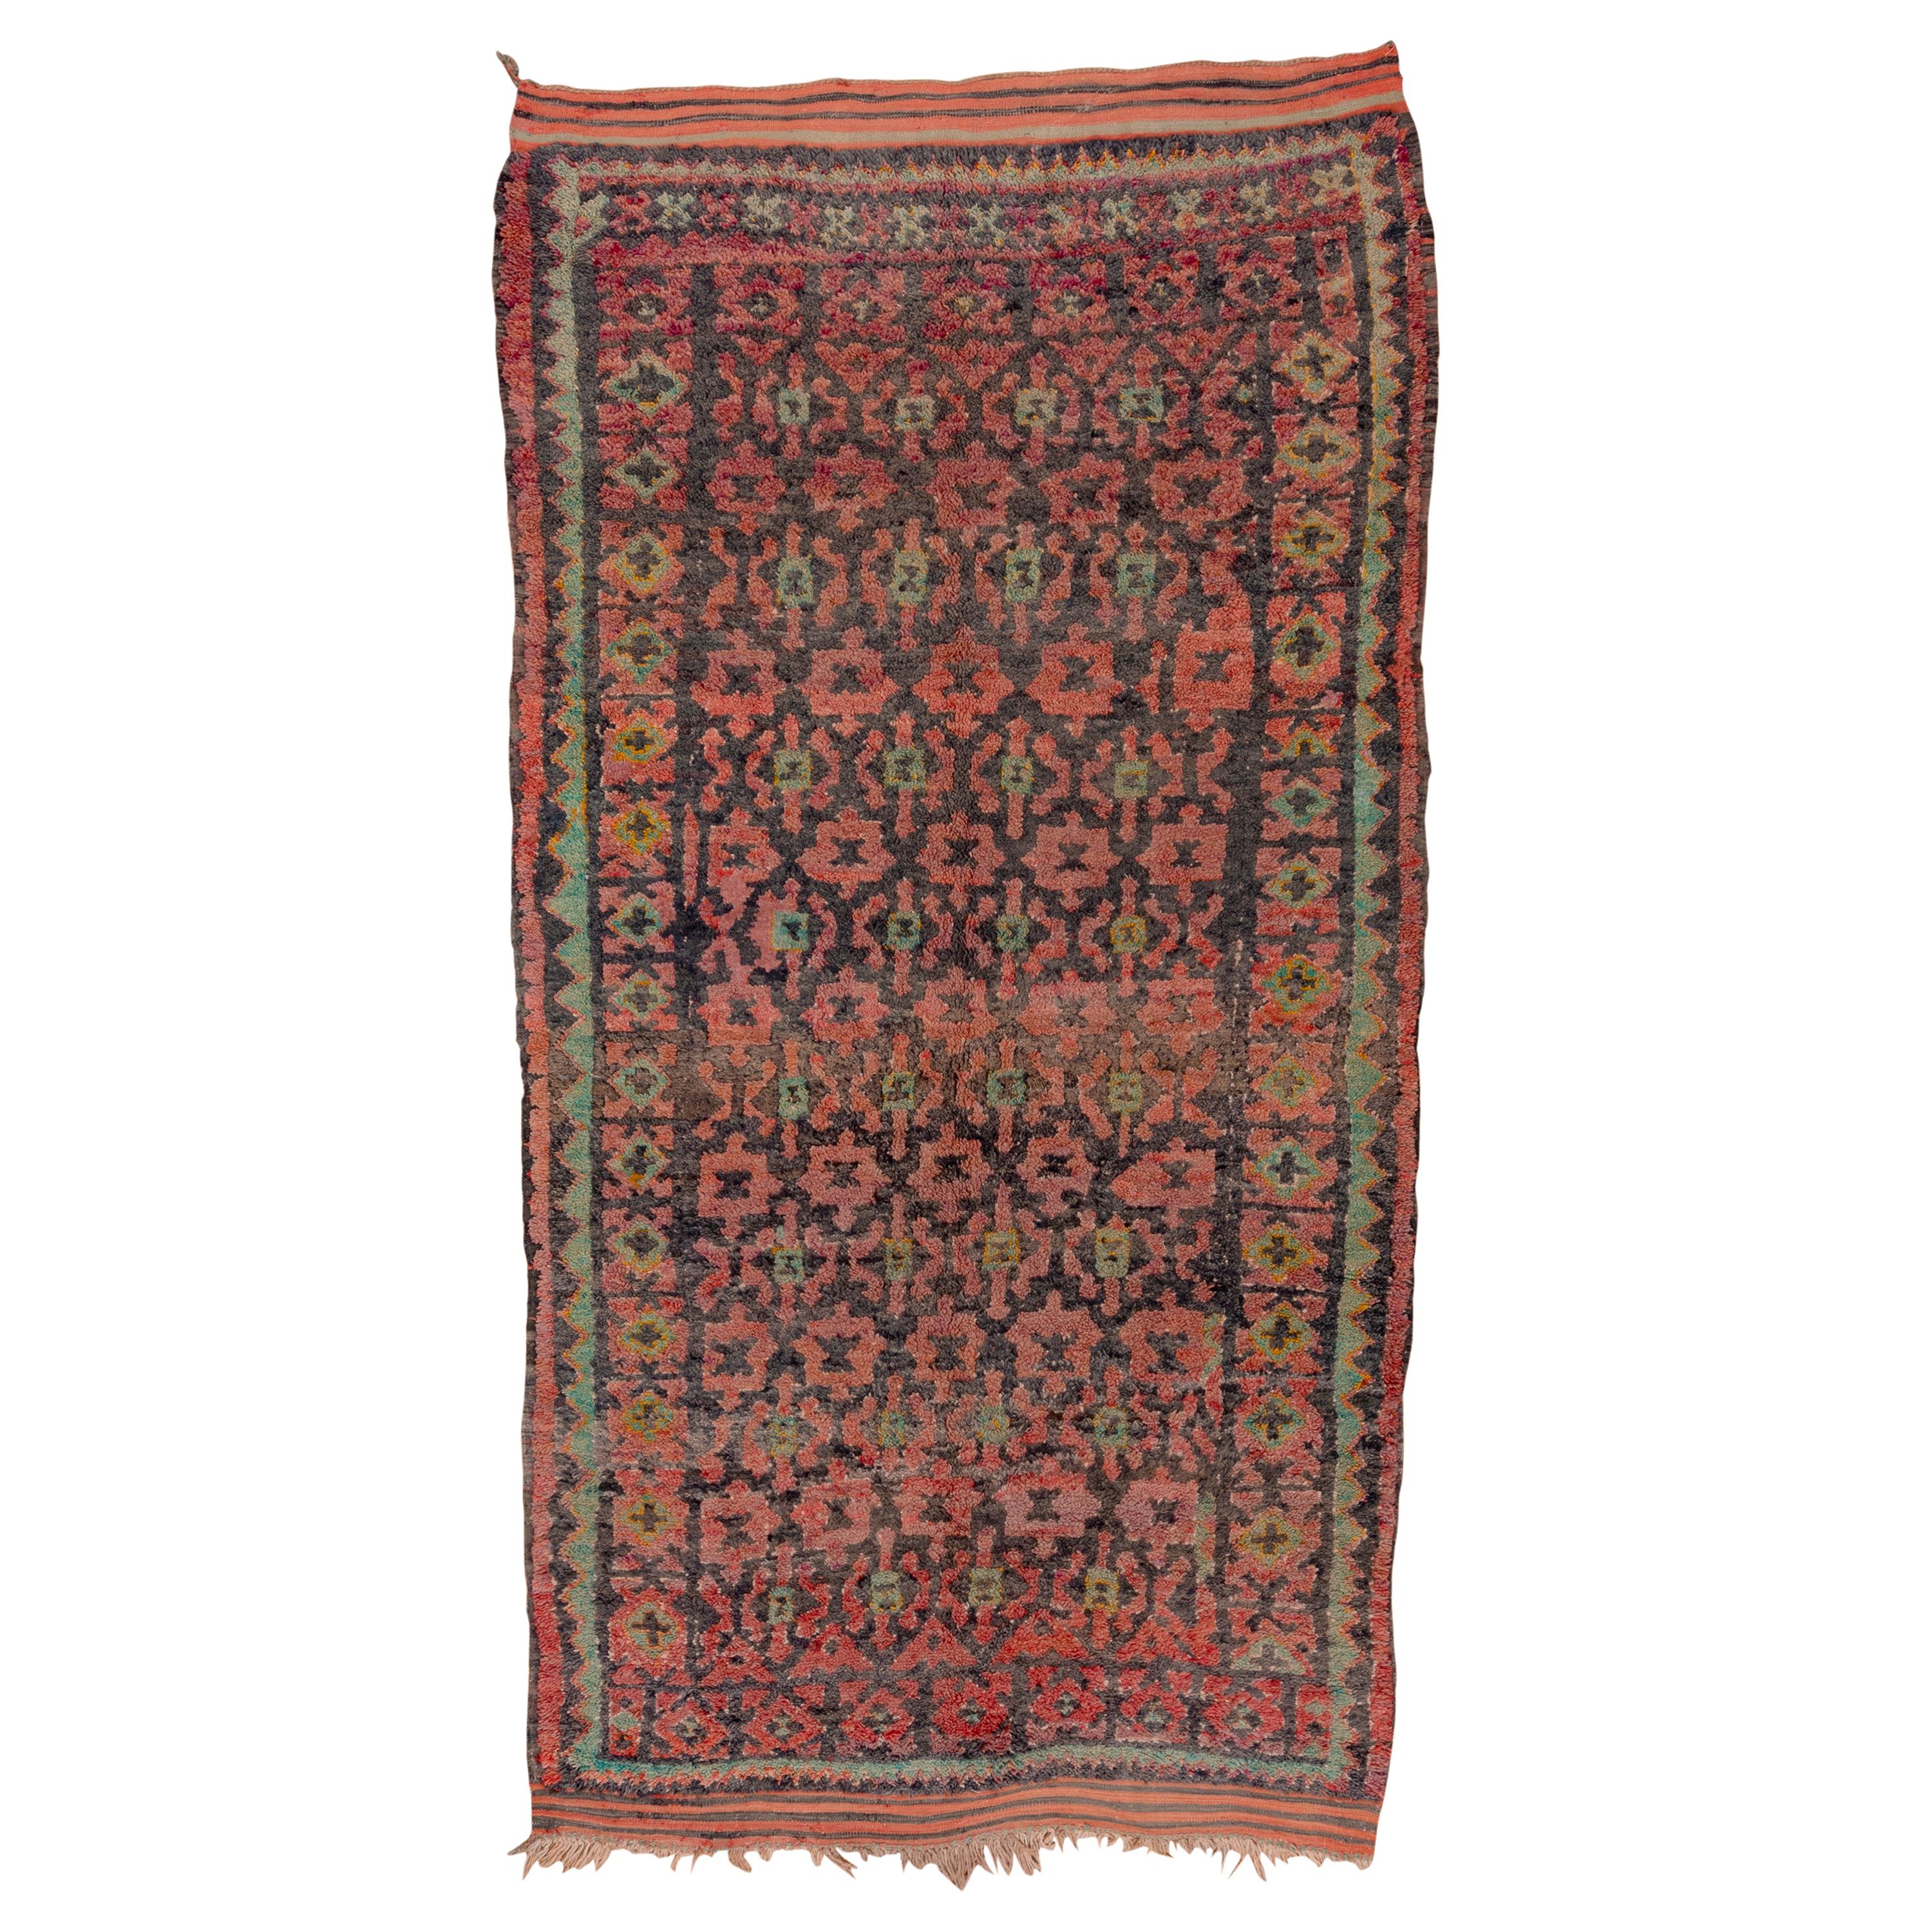 Colorful Tribal Vintage Moroccan Carpet, circa 1940s